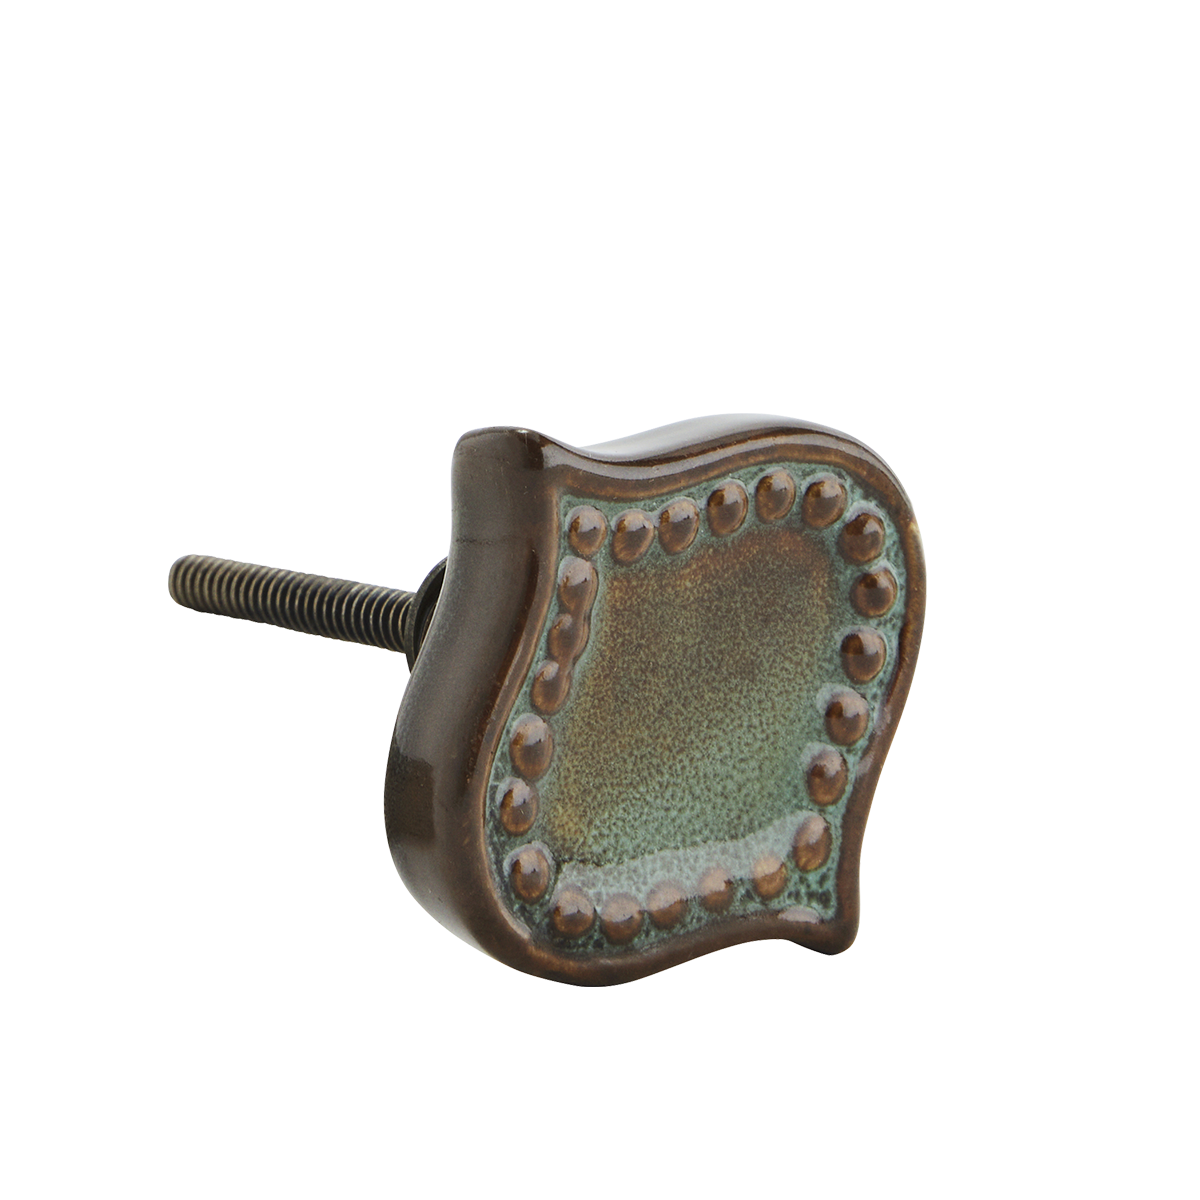 Handmade stoneware door knob